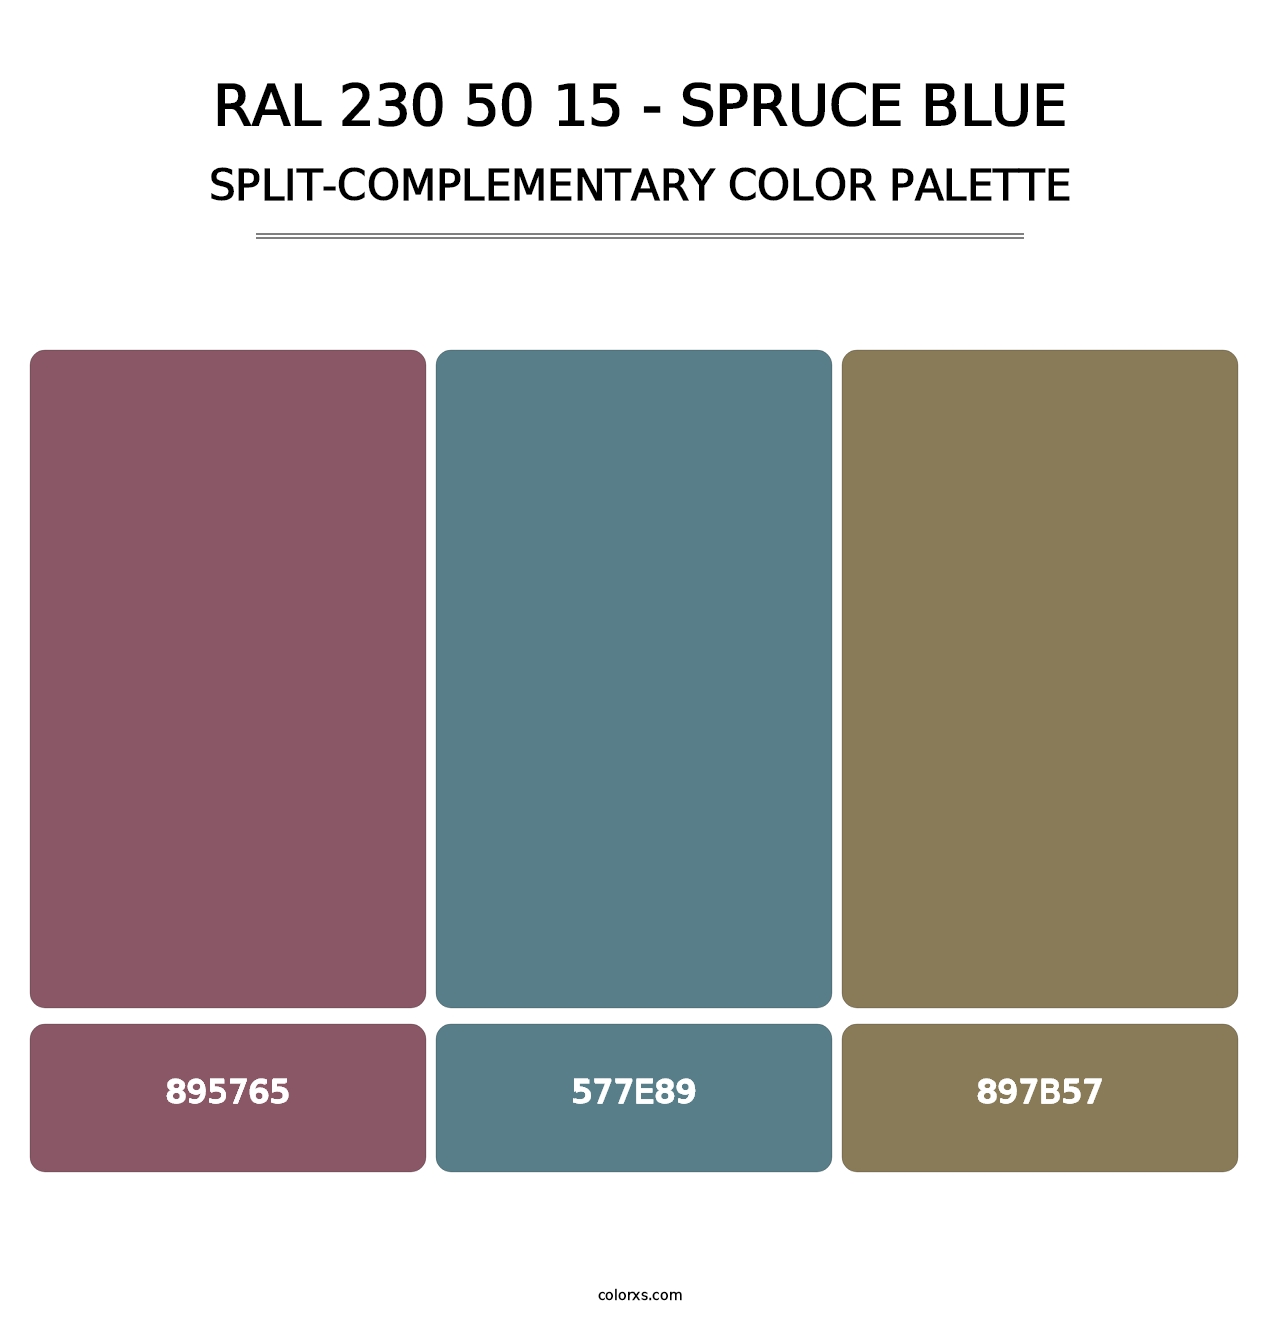 RAL 230 50 15 - Spruce Blue - Split-Complementary Color Palette